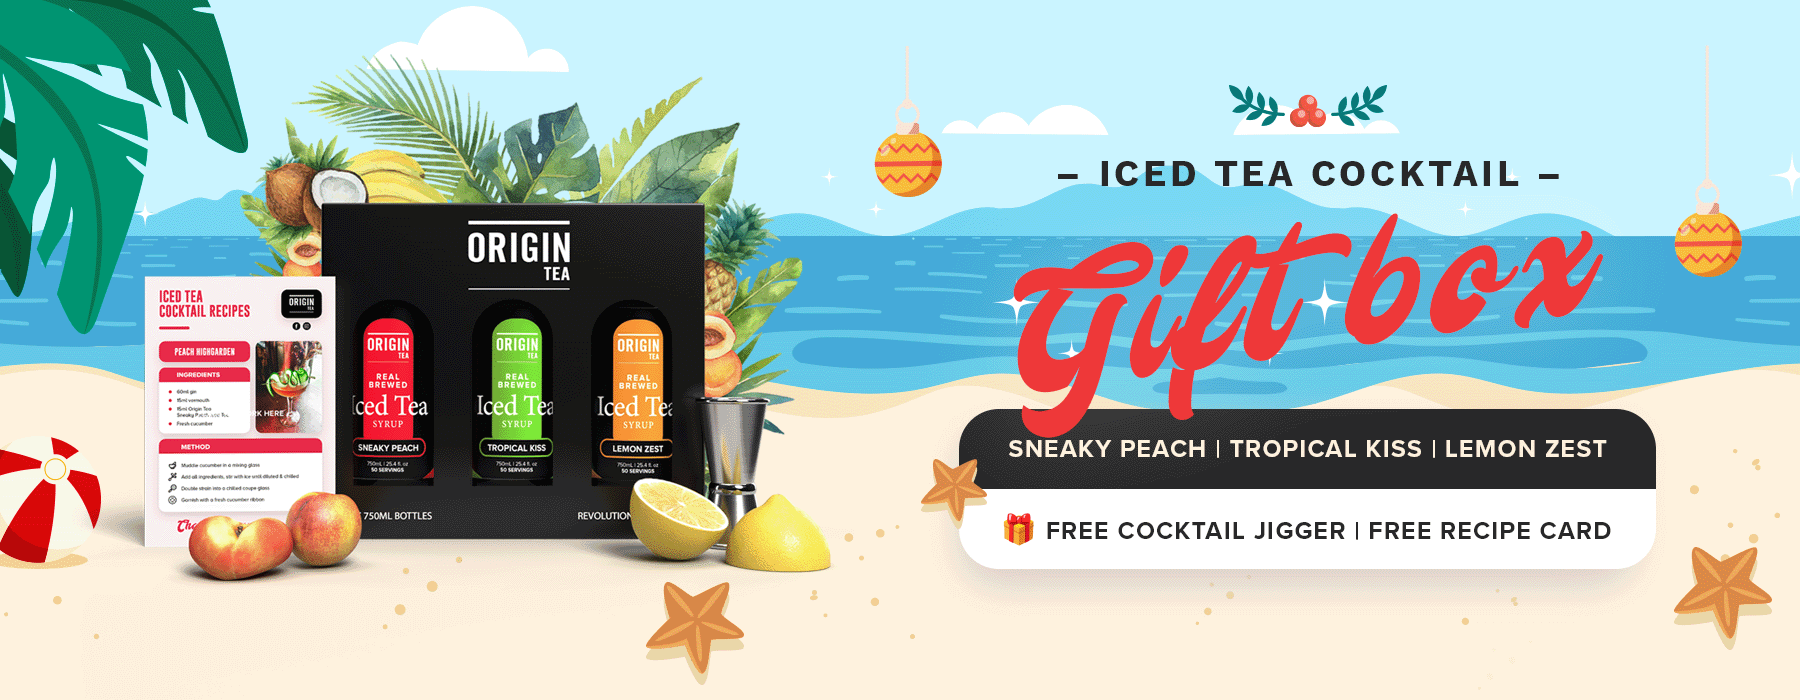 Iced Tea Cocktail Gift Box - Peach, Tropical, Lemon Zest + Free Cocktail Jigger + Free Recipe Card